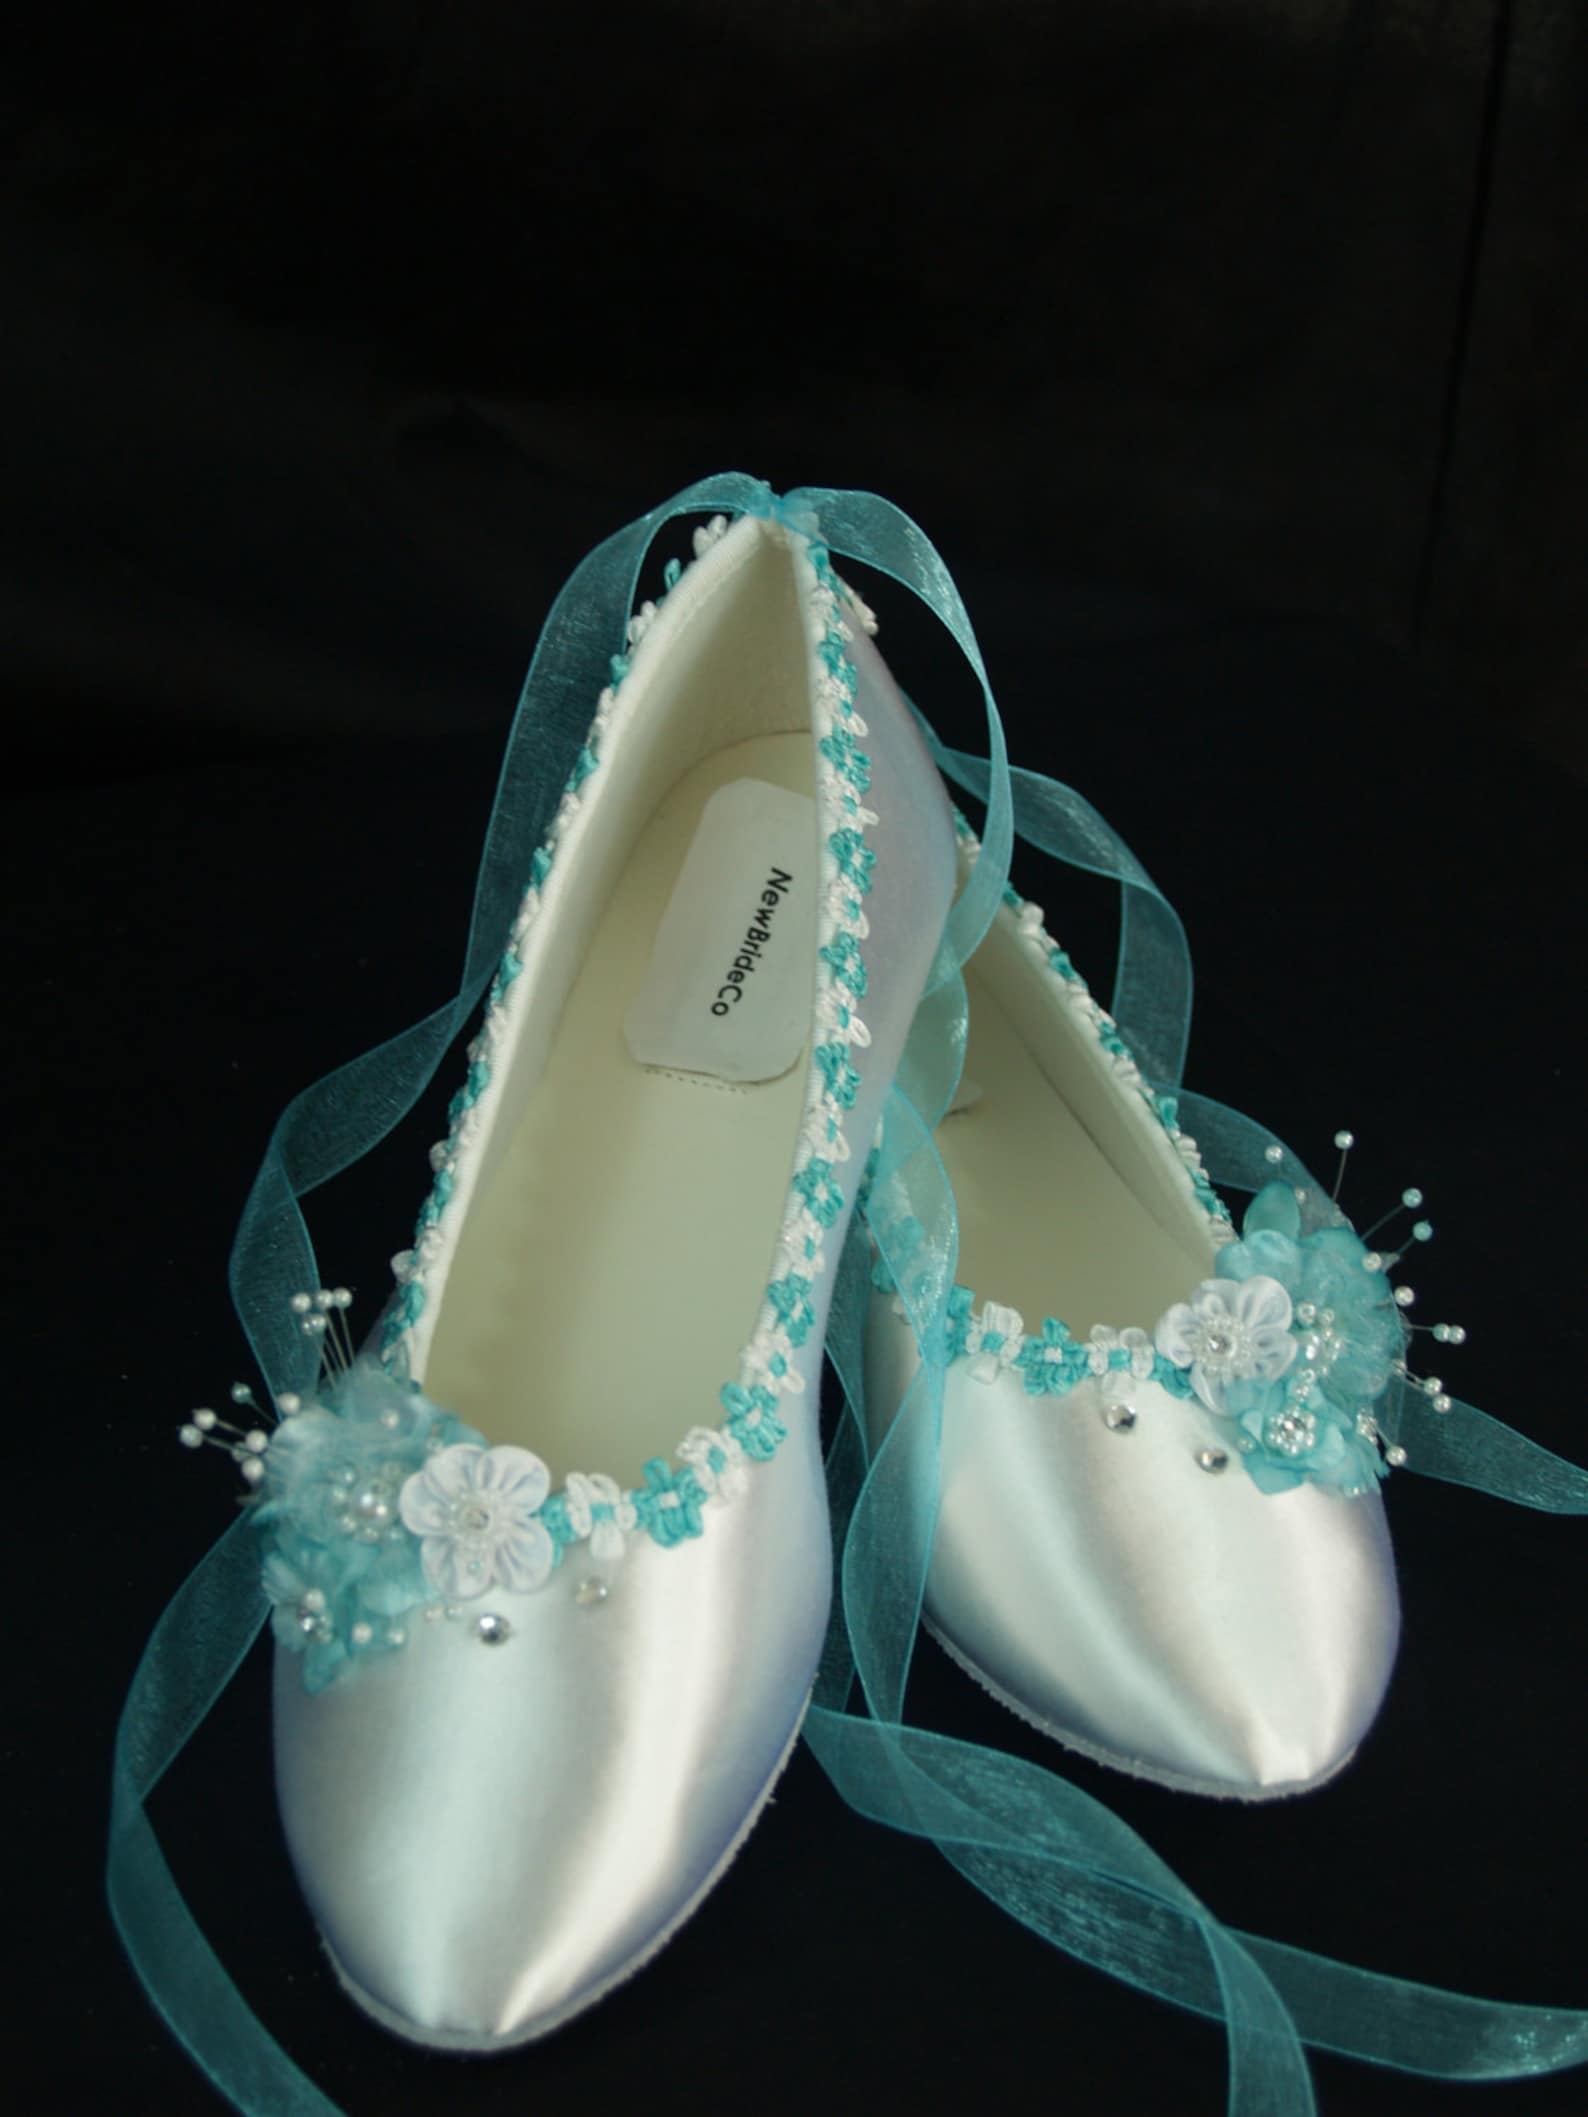 flat shoes aqua blue trims on ballet style slipper - aqua blue flat shoes, white satin flats, ribbon lace up flats, something bl